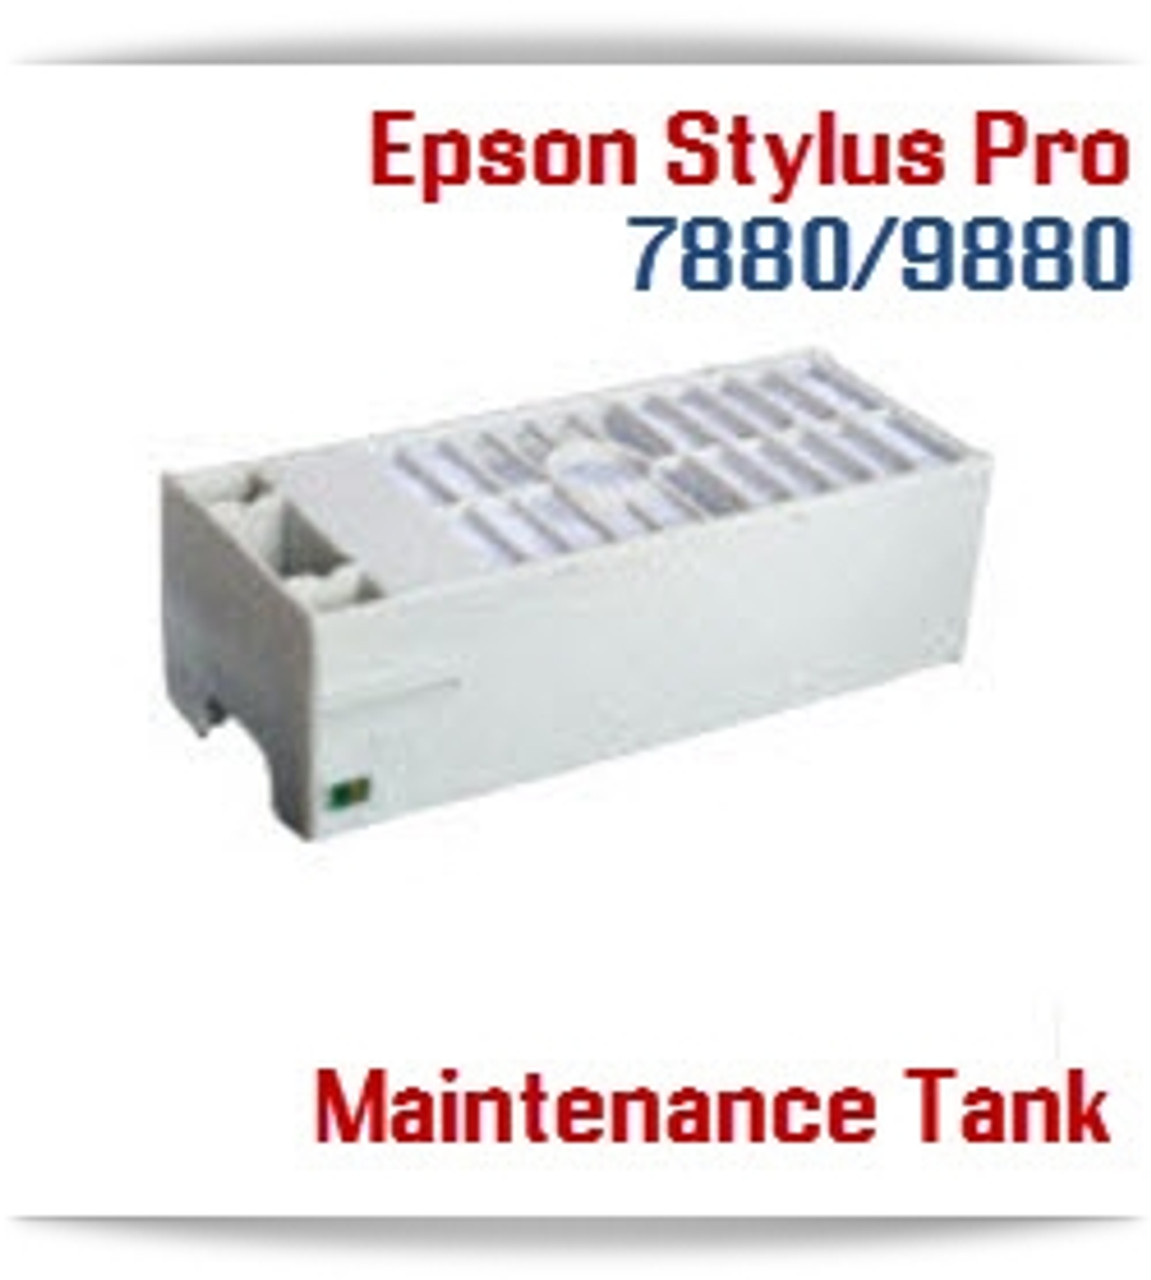 Compatible Maintenance Tank for EPSON Stylus Pro 7880, 9880 Printers